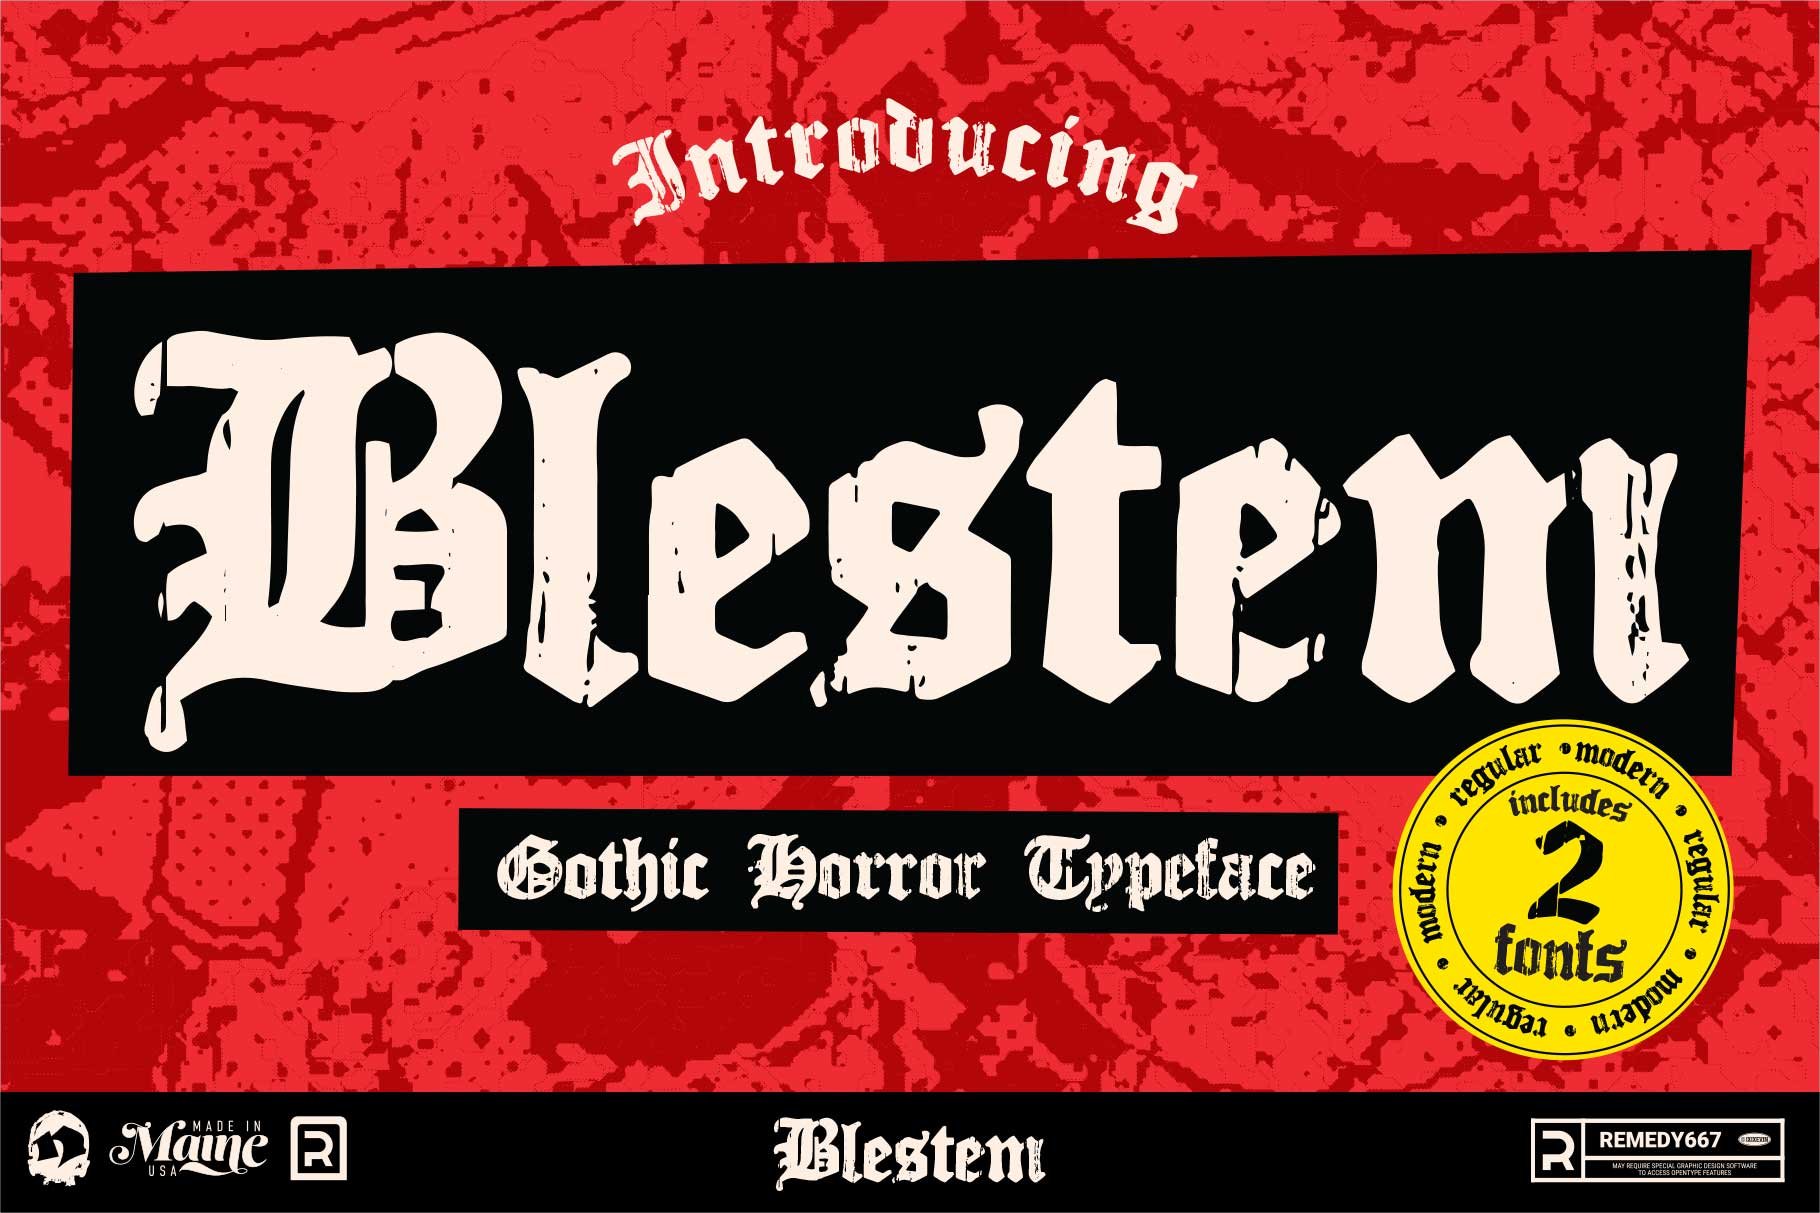 Blestem – Gothic Horror Typeface cover image.